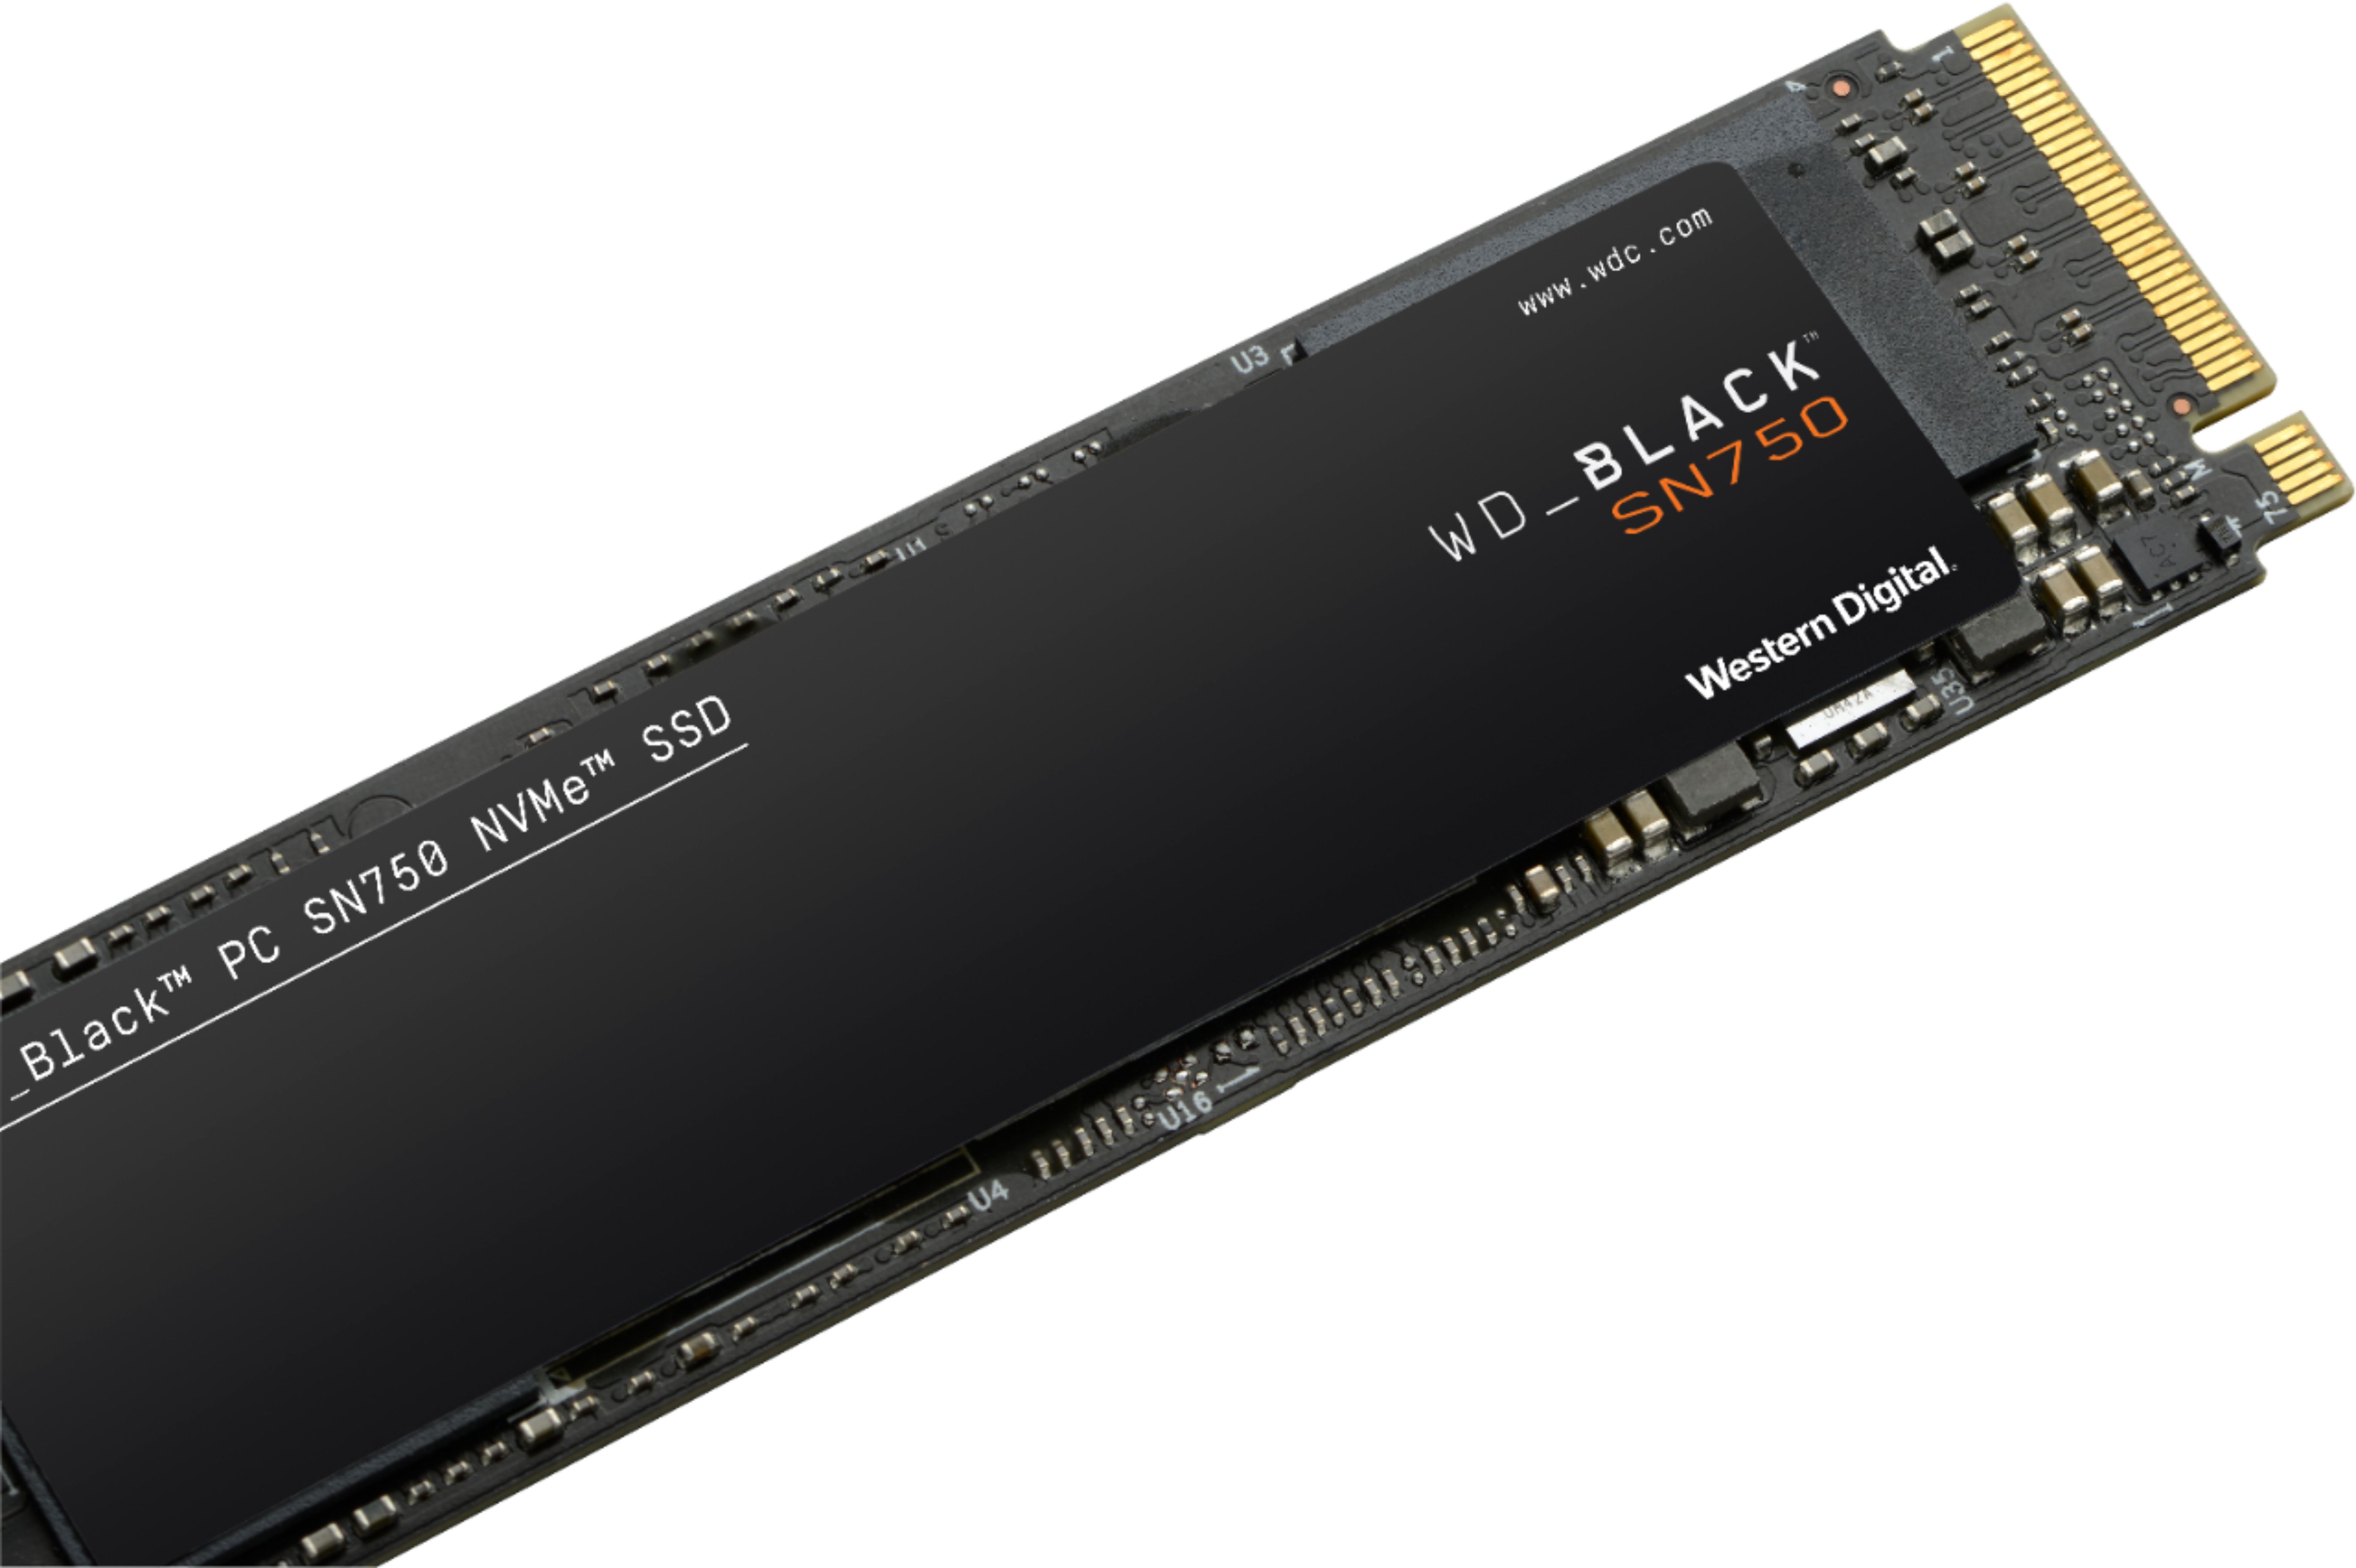 Wd Wd Black Sn750 Nvme 500gb Internal Pcie Gen 3 X 4 Solid State Drive For Laptops Desktops Wdbrpg5000anc Wrsn Best Buy